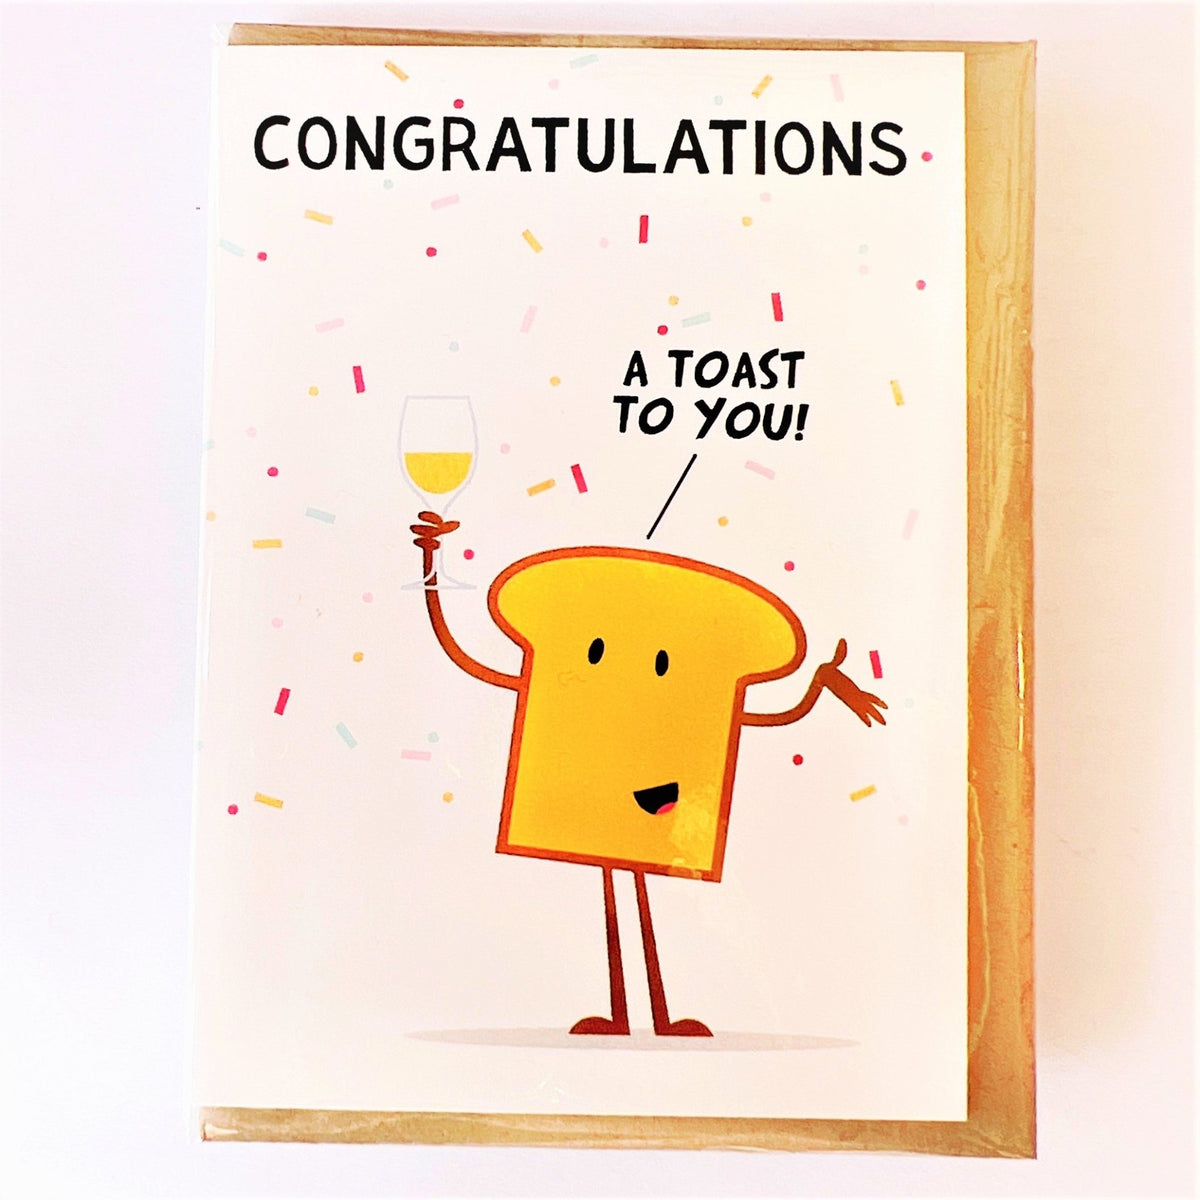 Mini Cards - Congratulations - Gift & Gather